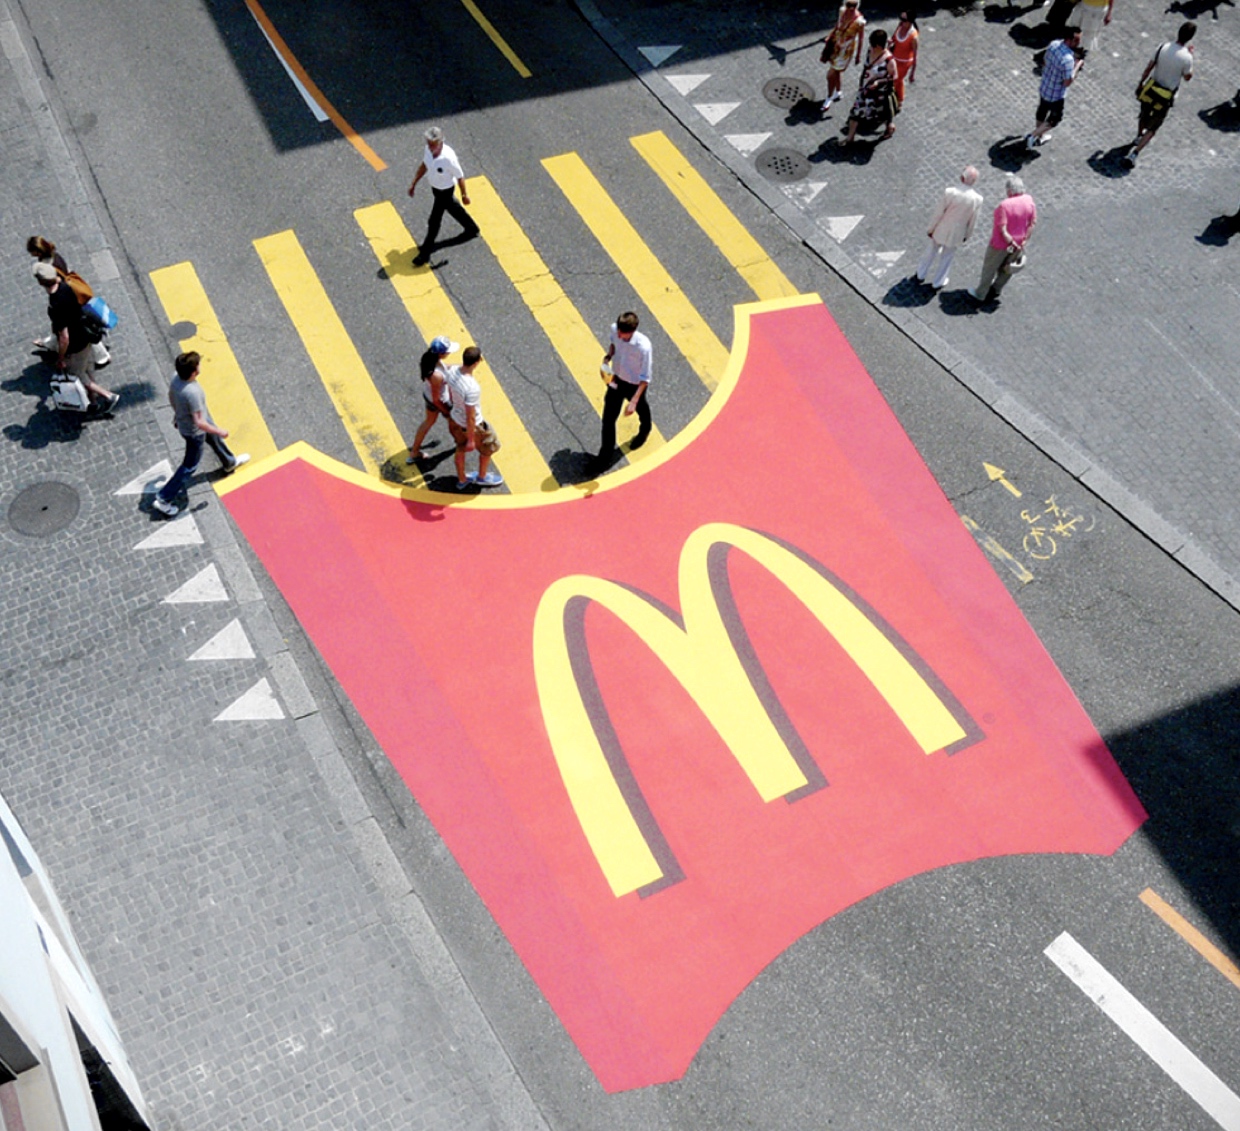 McDonald's Fries Crosswalk